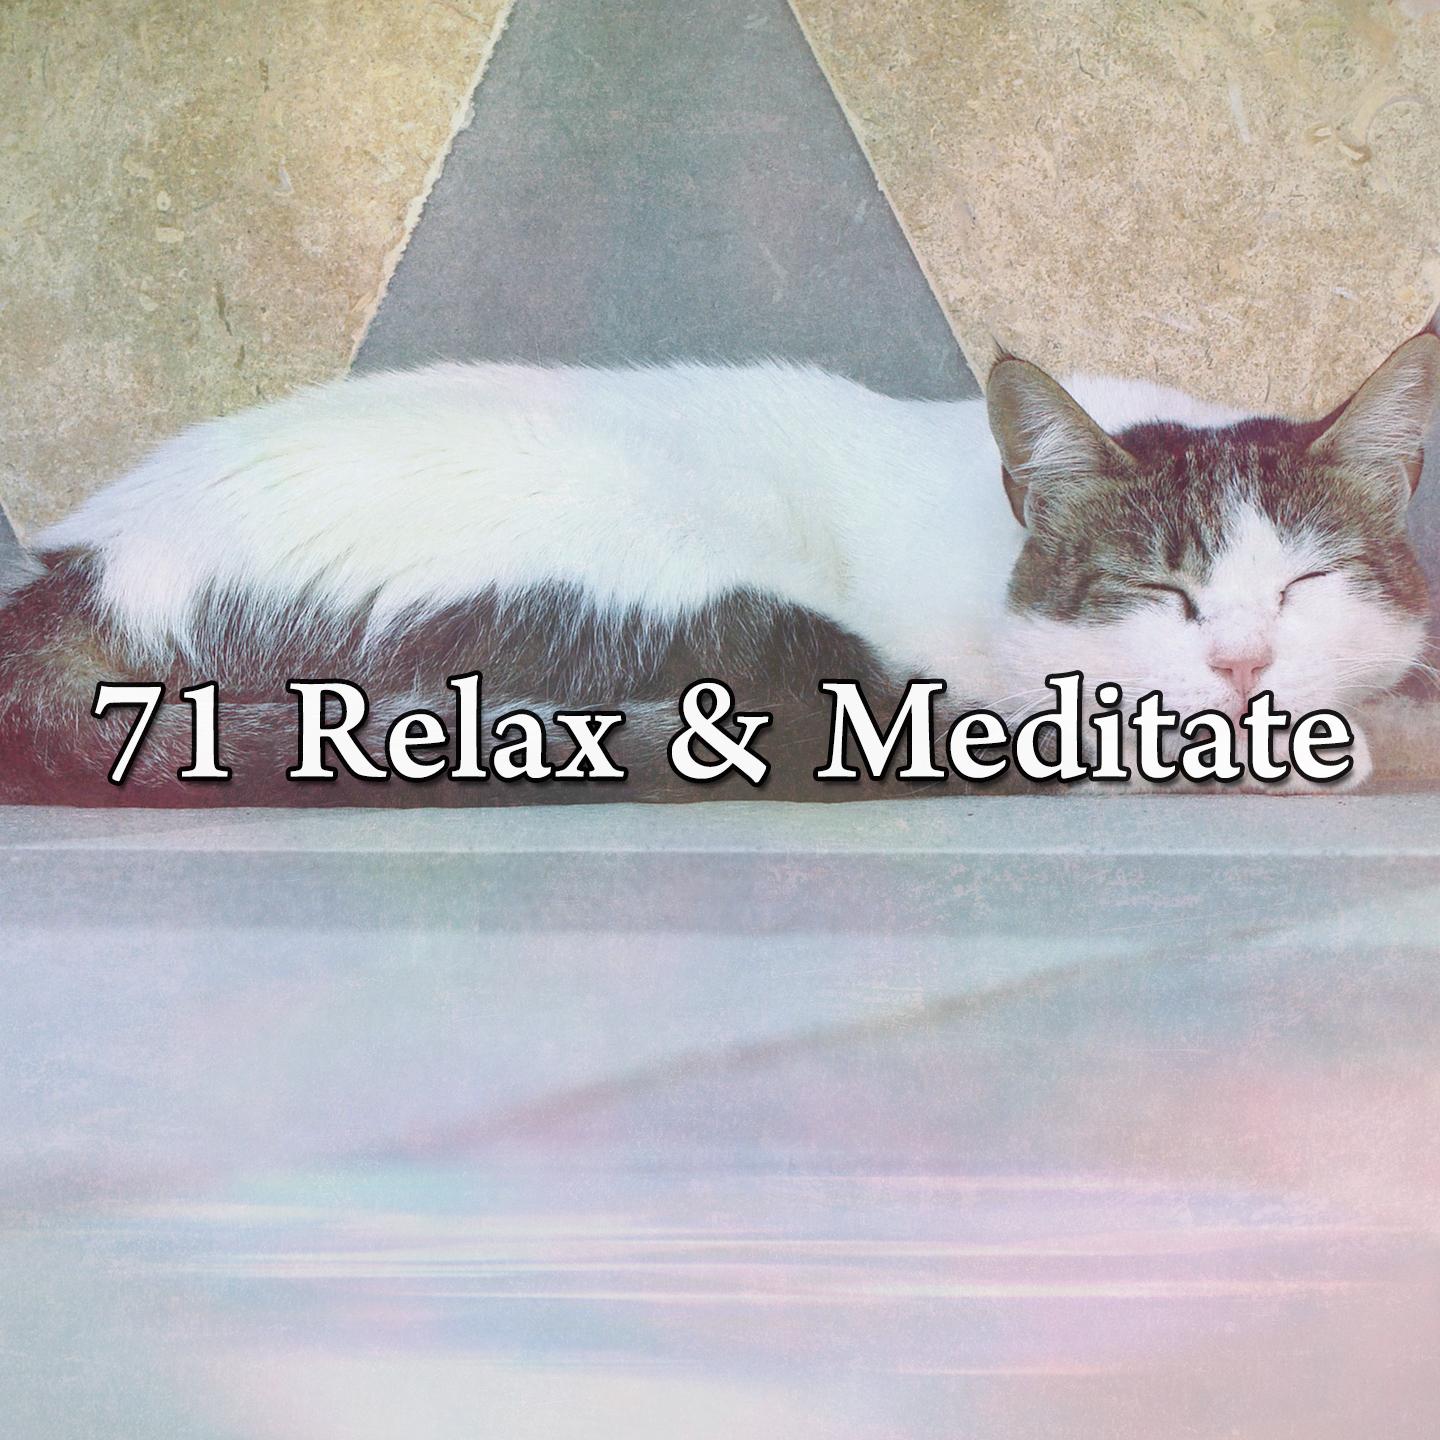 71 Relax & Meditate